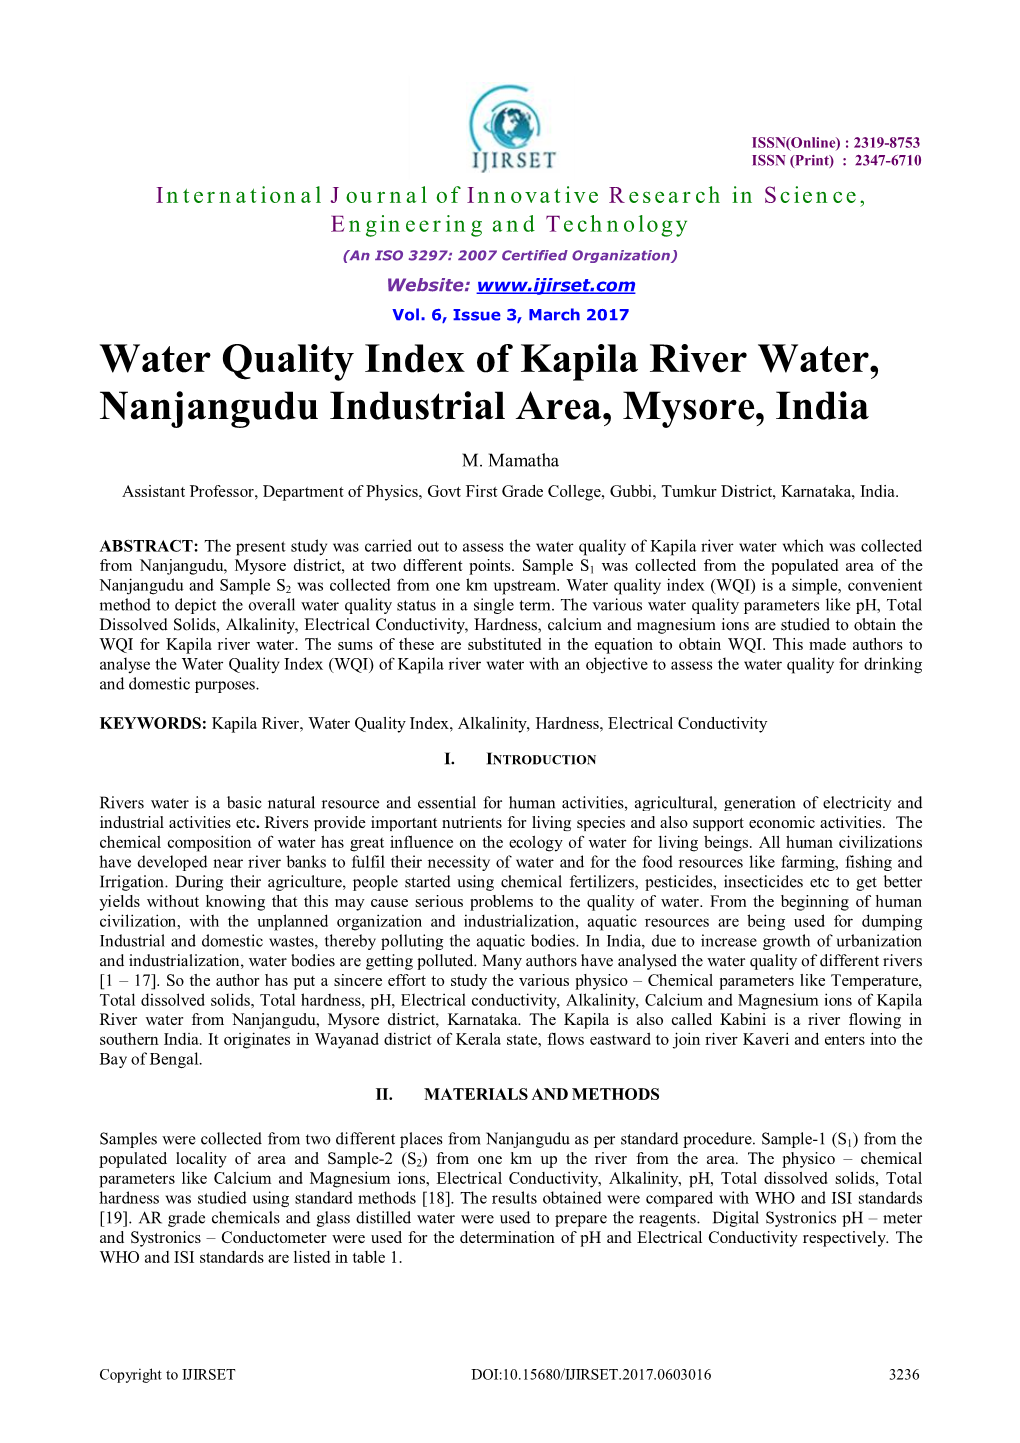 Water Quality Index of Kapila River Water, Nanjangudu Industrial Area, Mysore, India